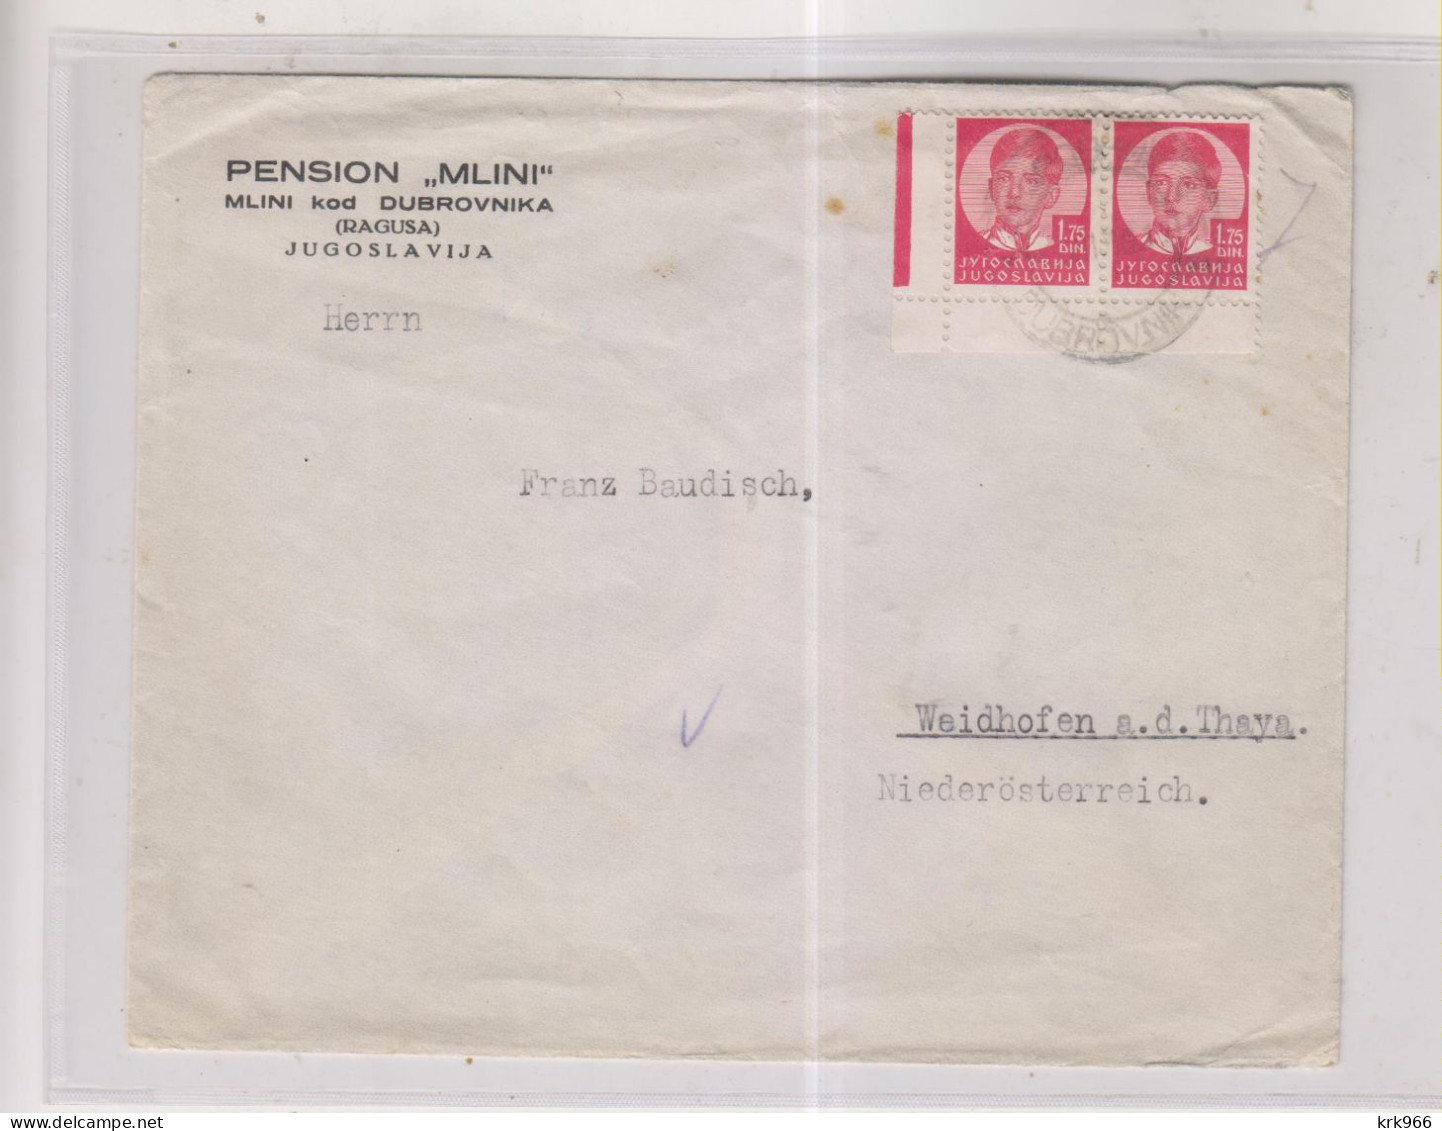 YUGOSLAVIA 1936 DUBROVNIK Mice Cover To Austria PENSION MLINI - Covers & Documents